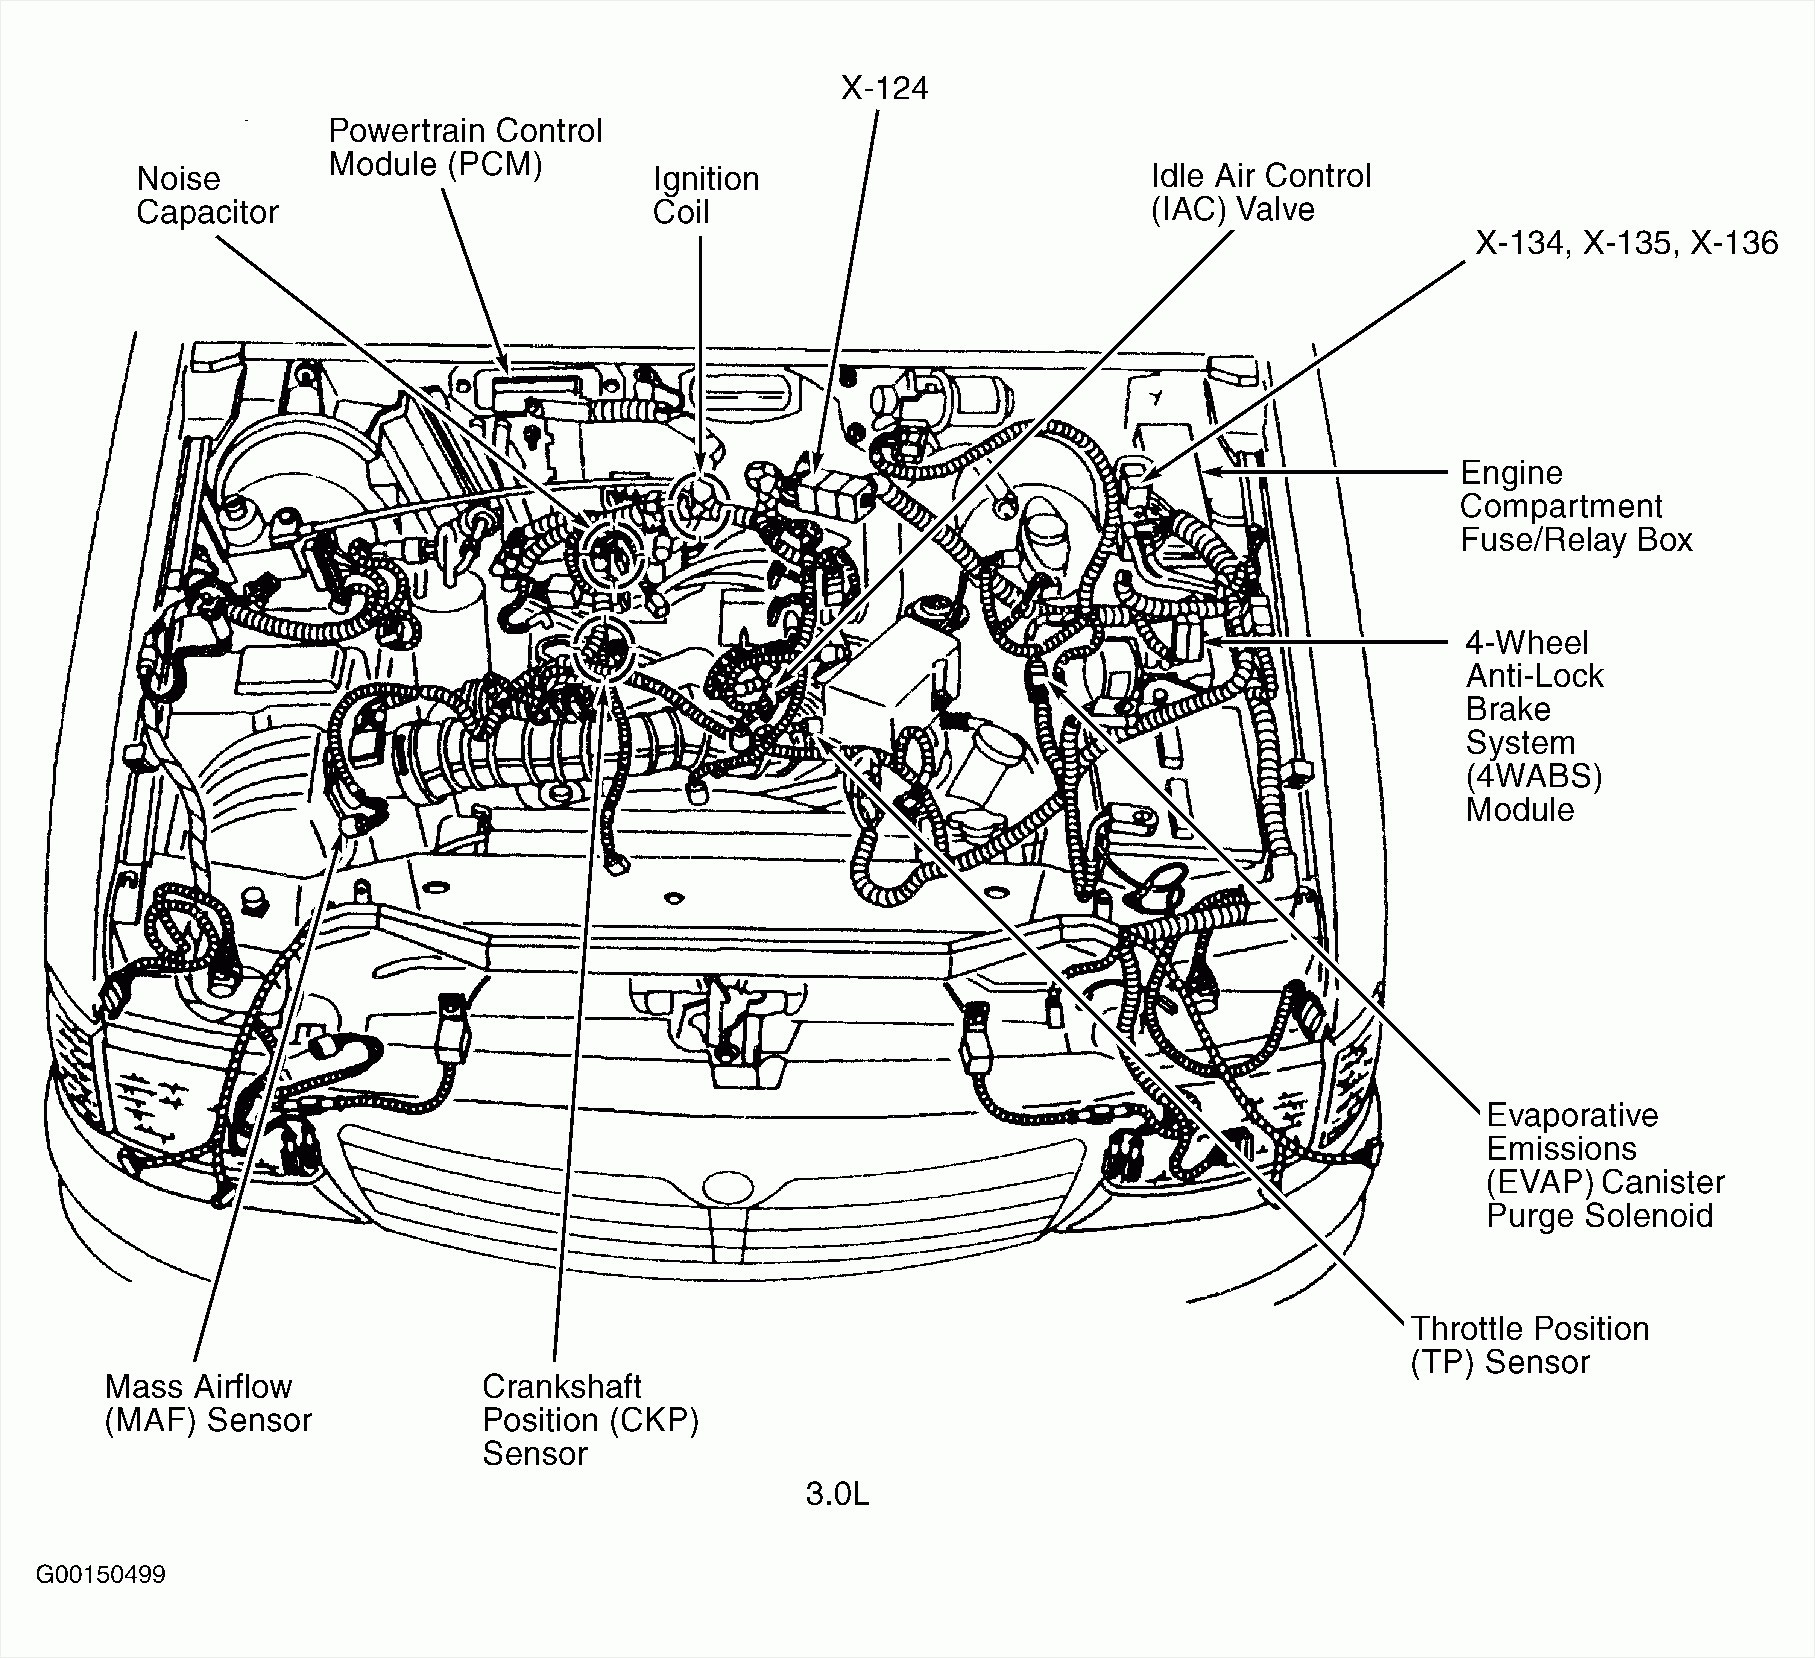 1997 Chevy Cavalier Engine Diagram 2 4 Reading Industrial